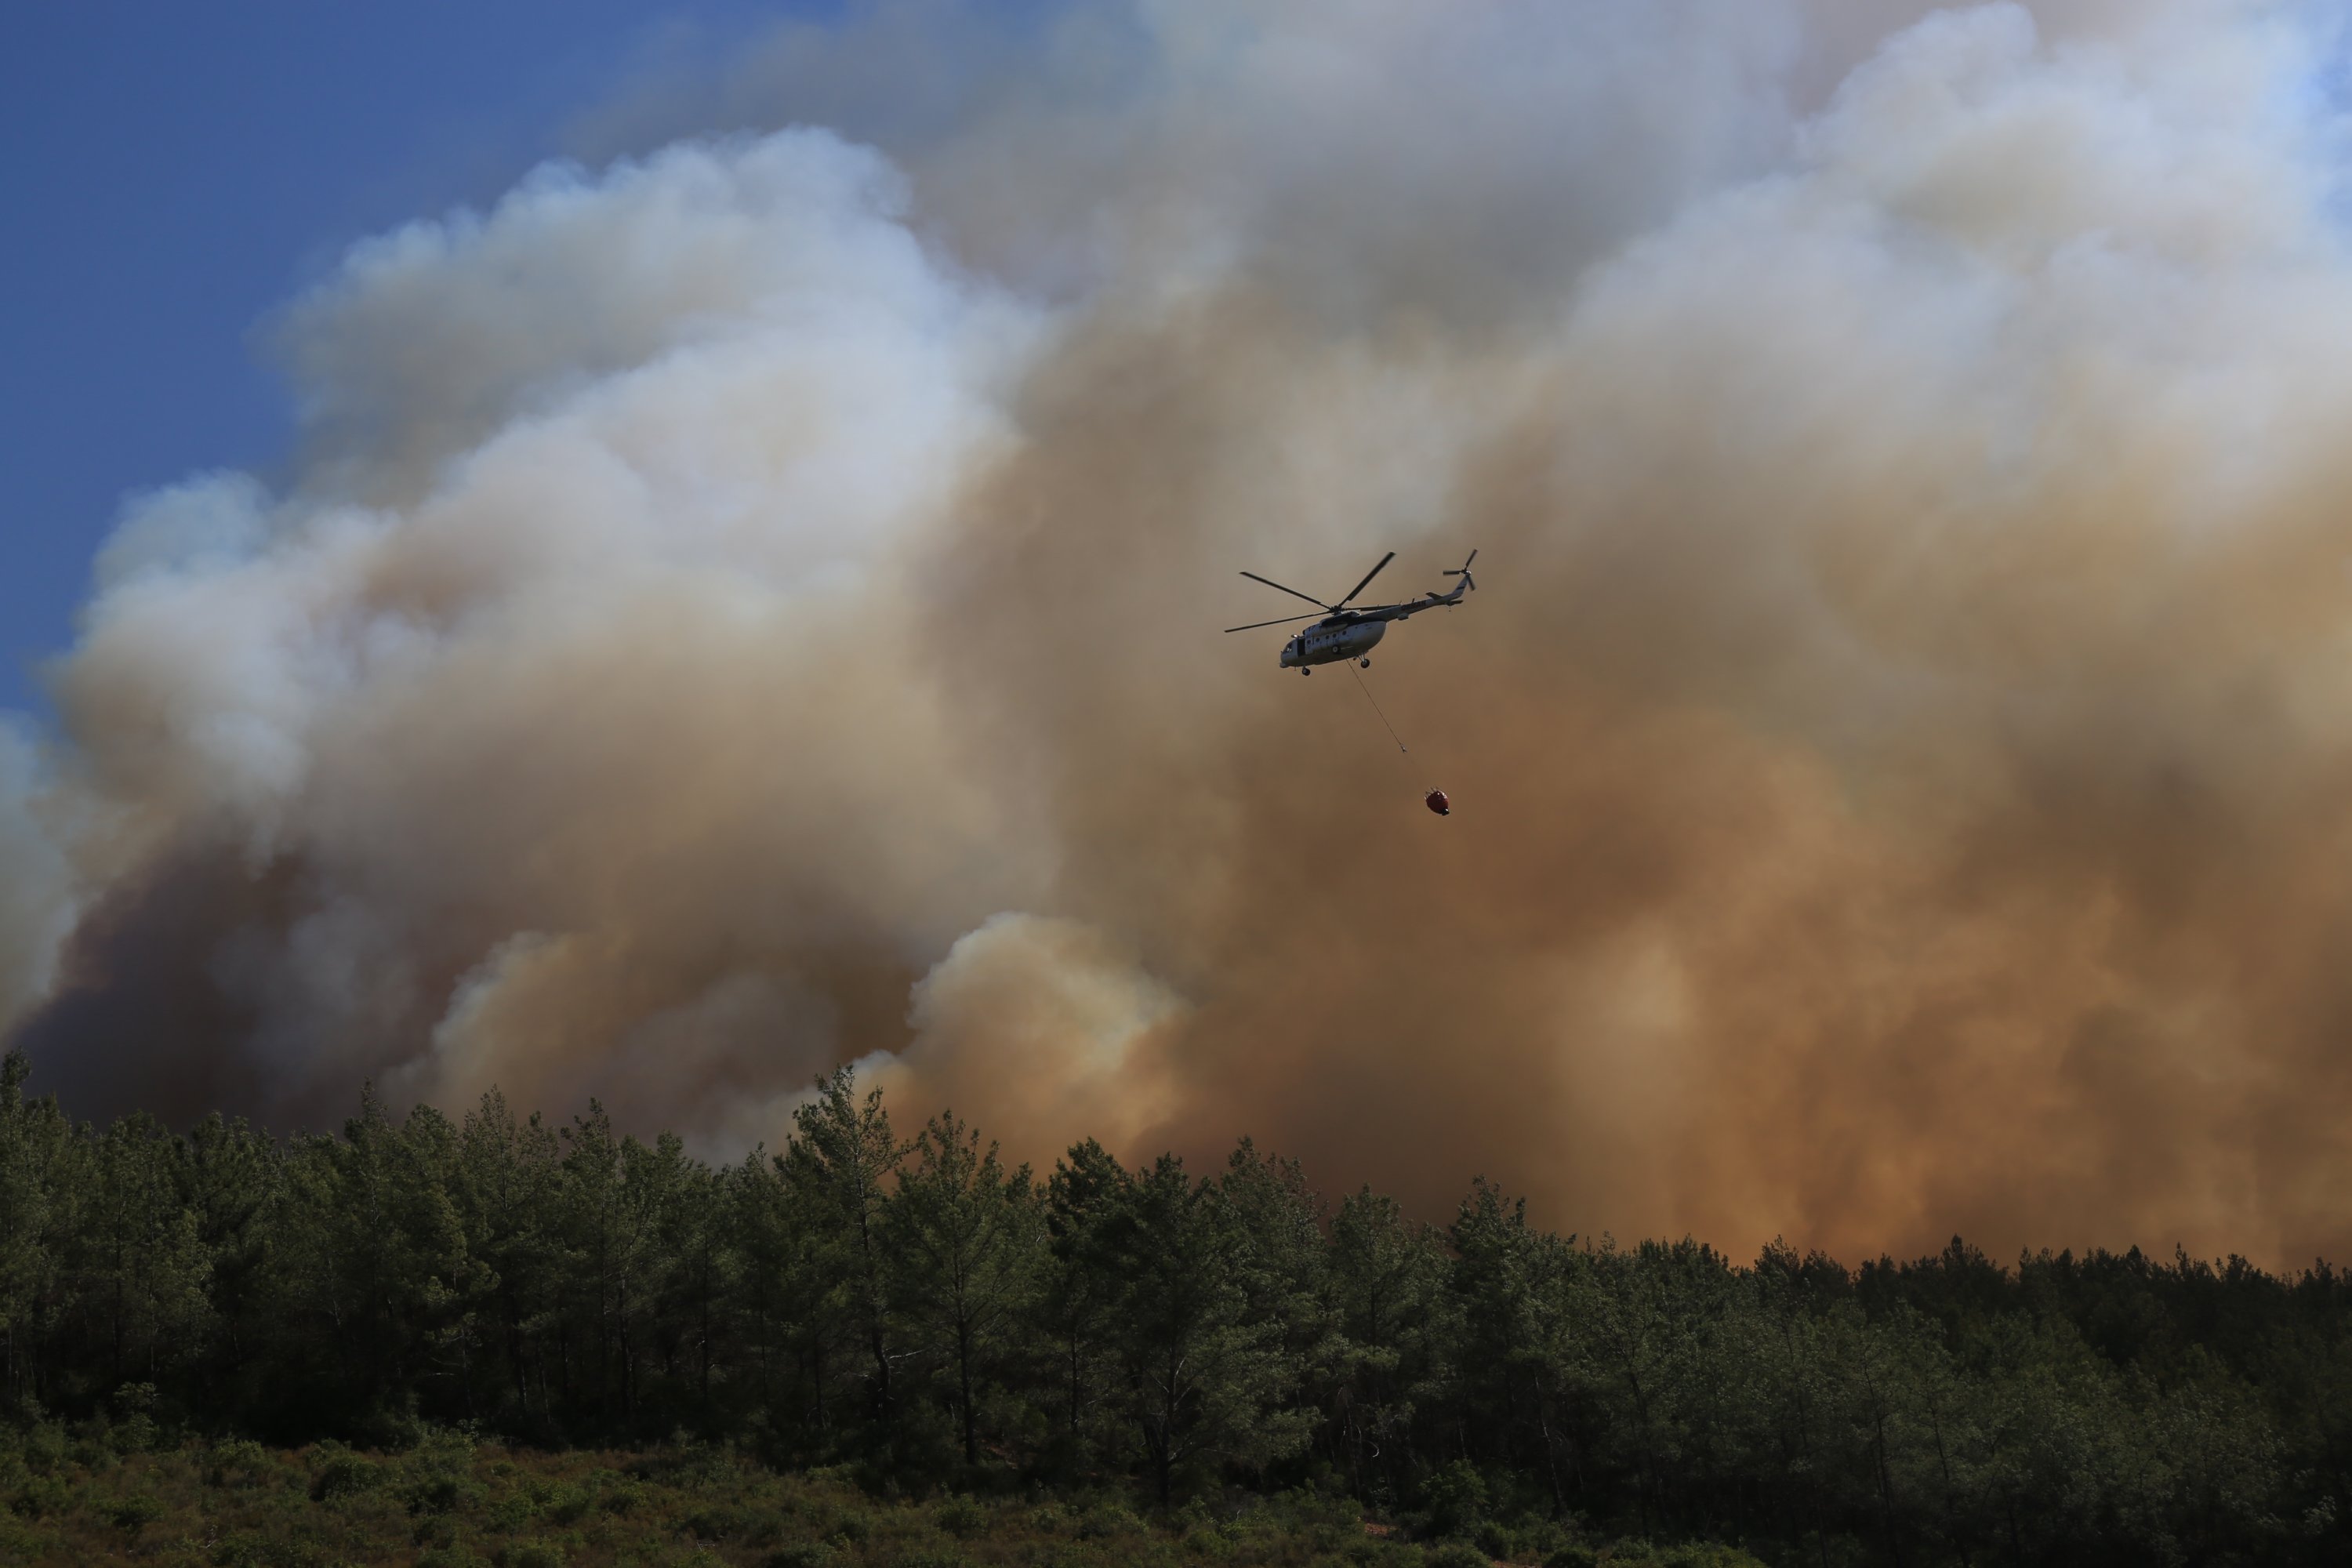 A forest fire burns in Milas district of Muğla province, southwestern Turkey, July 29, 2021. (AA Photo)